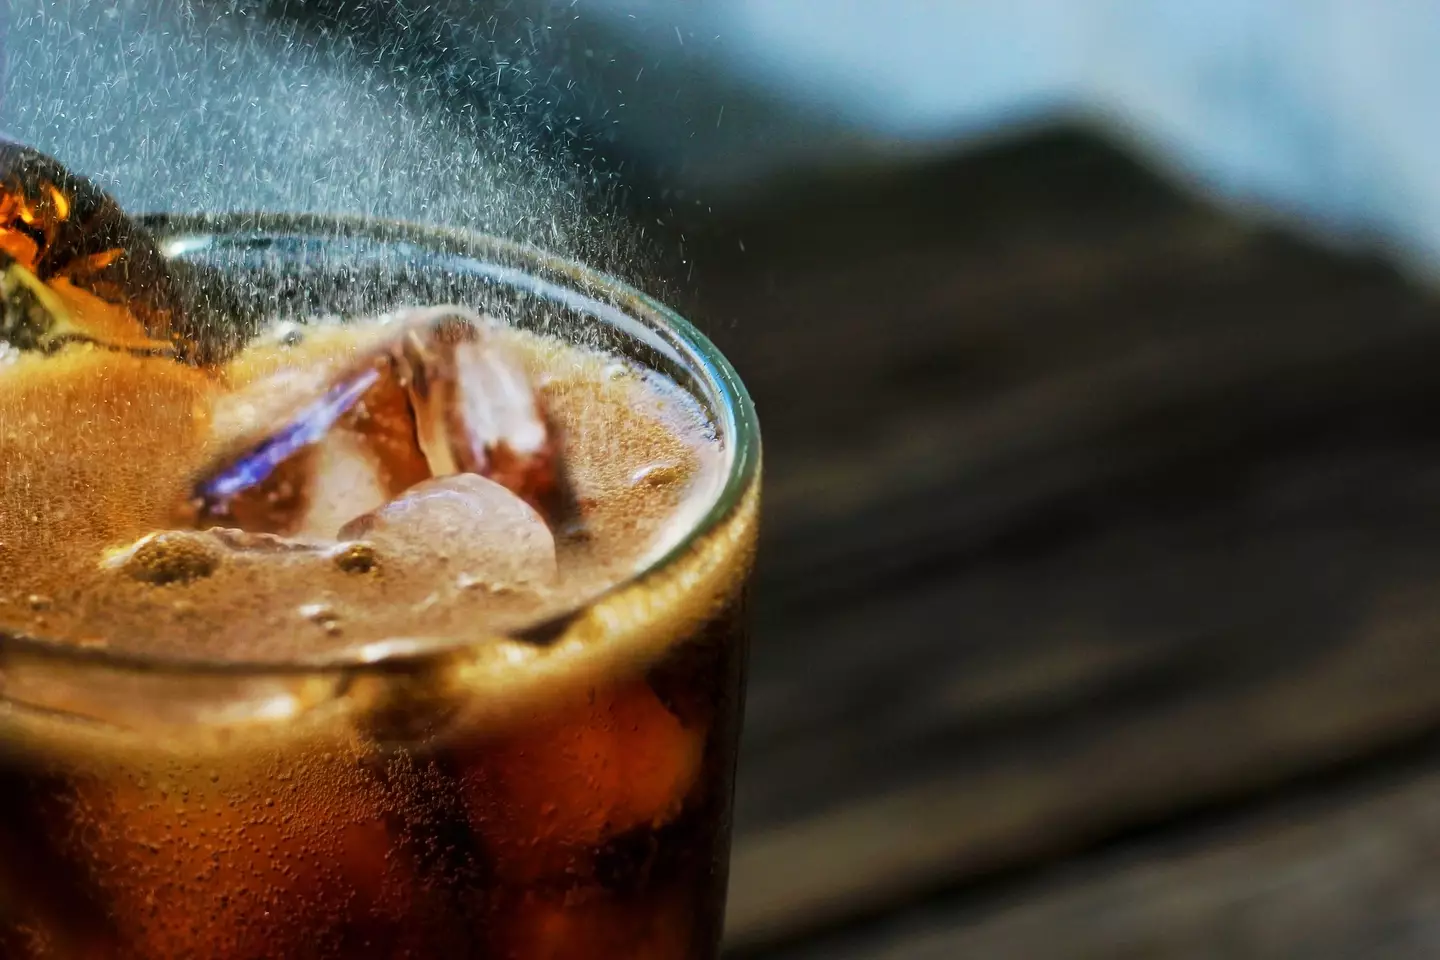 Pepsi's new formula has much less sugar.